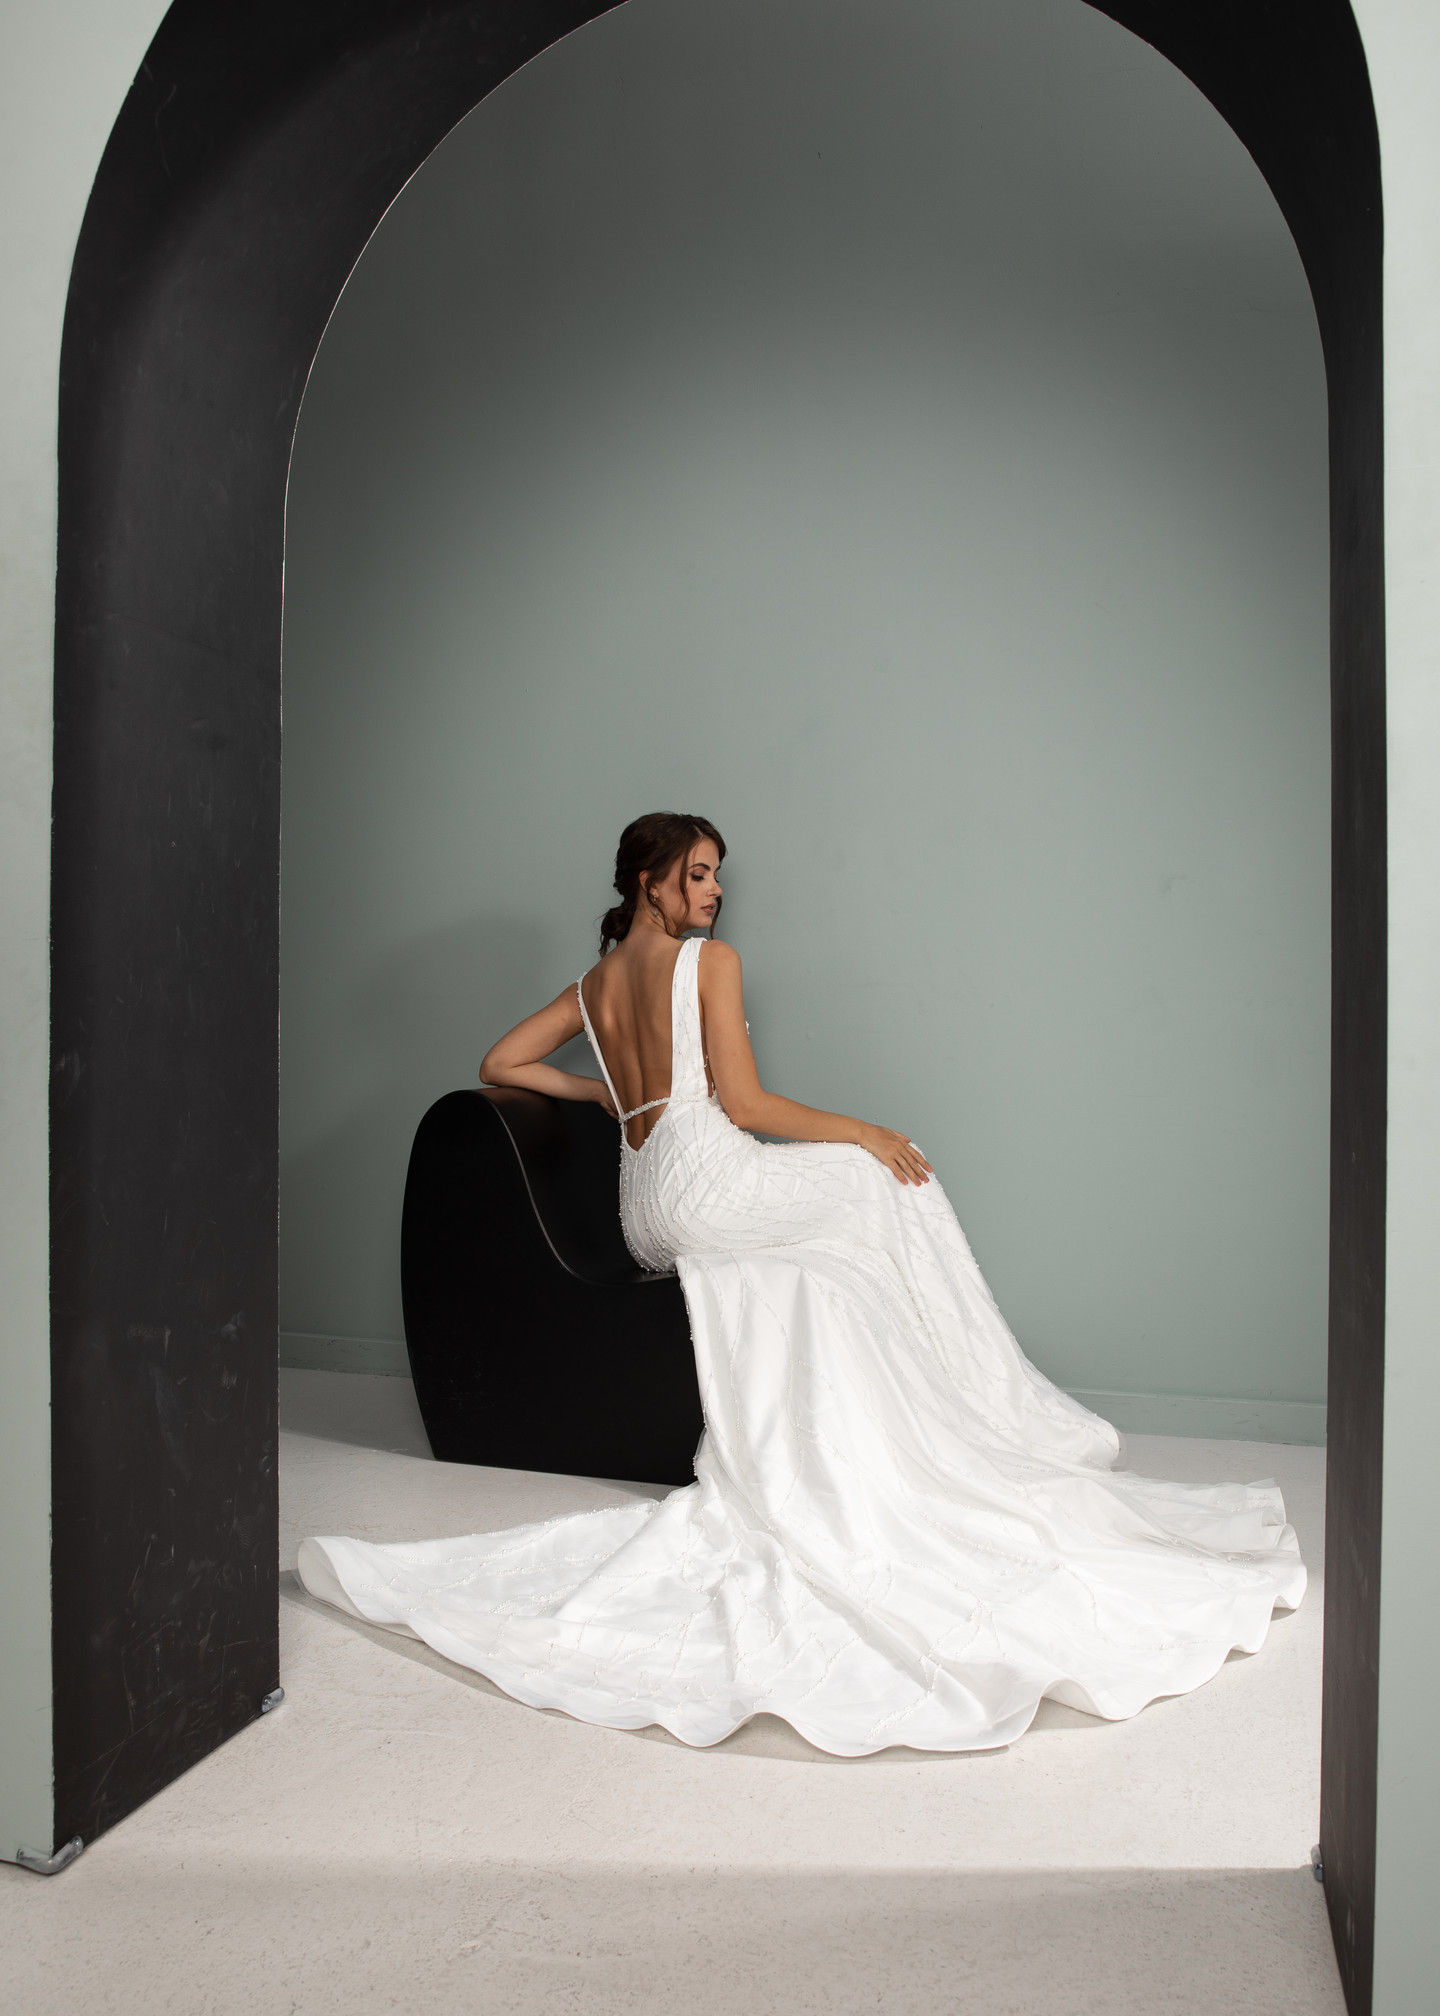 Aelita dress, 2021, couture, dress, bridal, off-white, embroidery, sheath silhouette, train